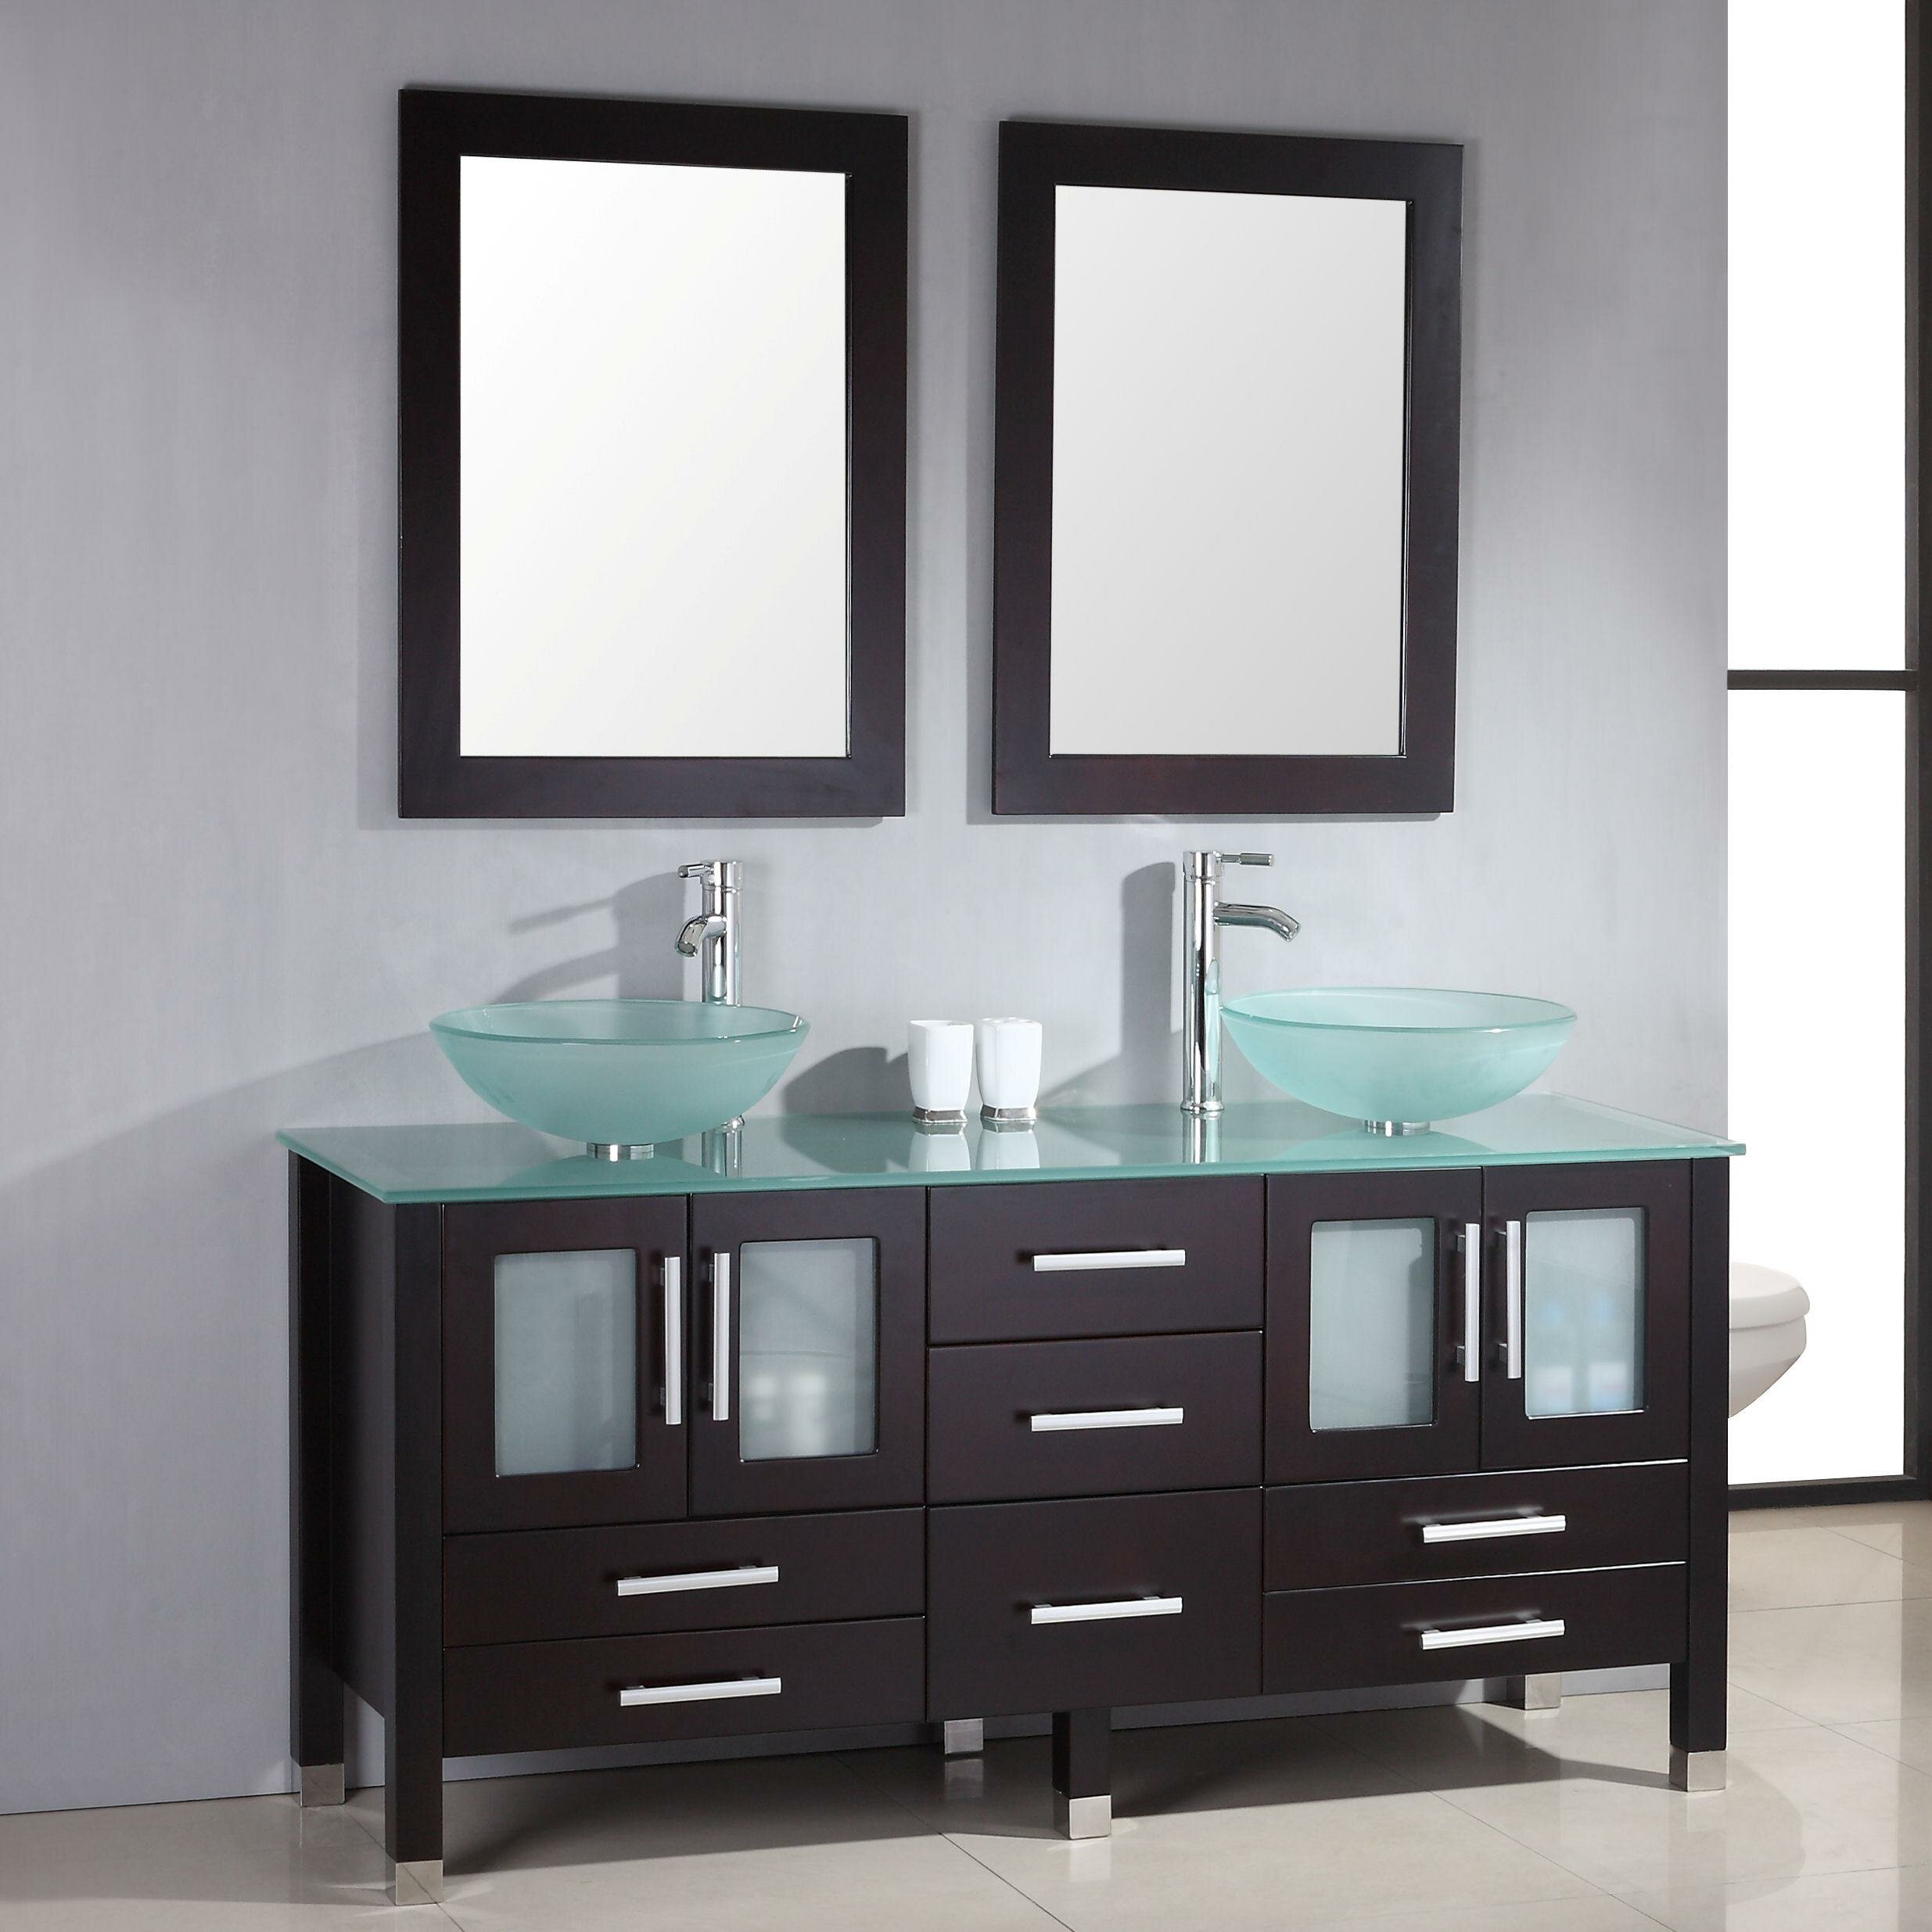 Bathroom Vanity Cabinets Home Depot | Home Depot 30 Inch Vanity | Vanity Home Depot